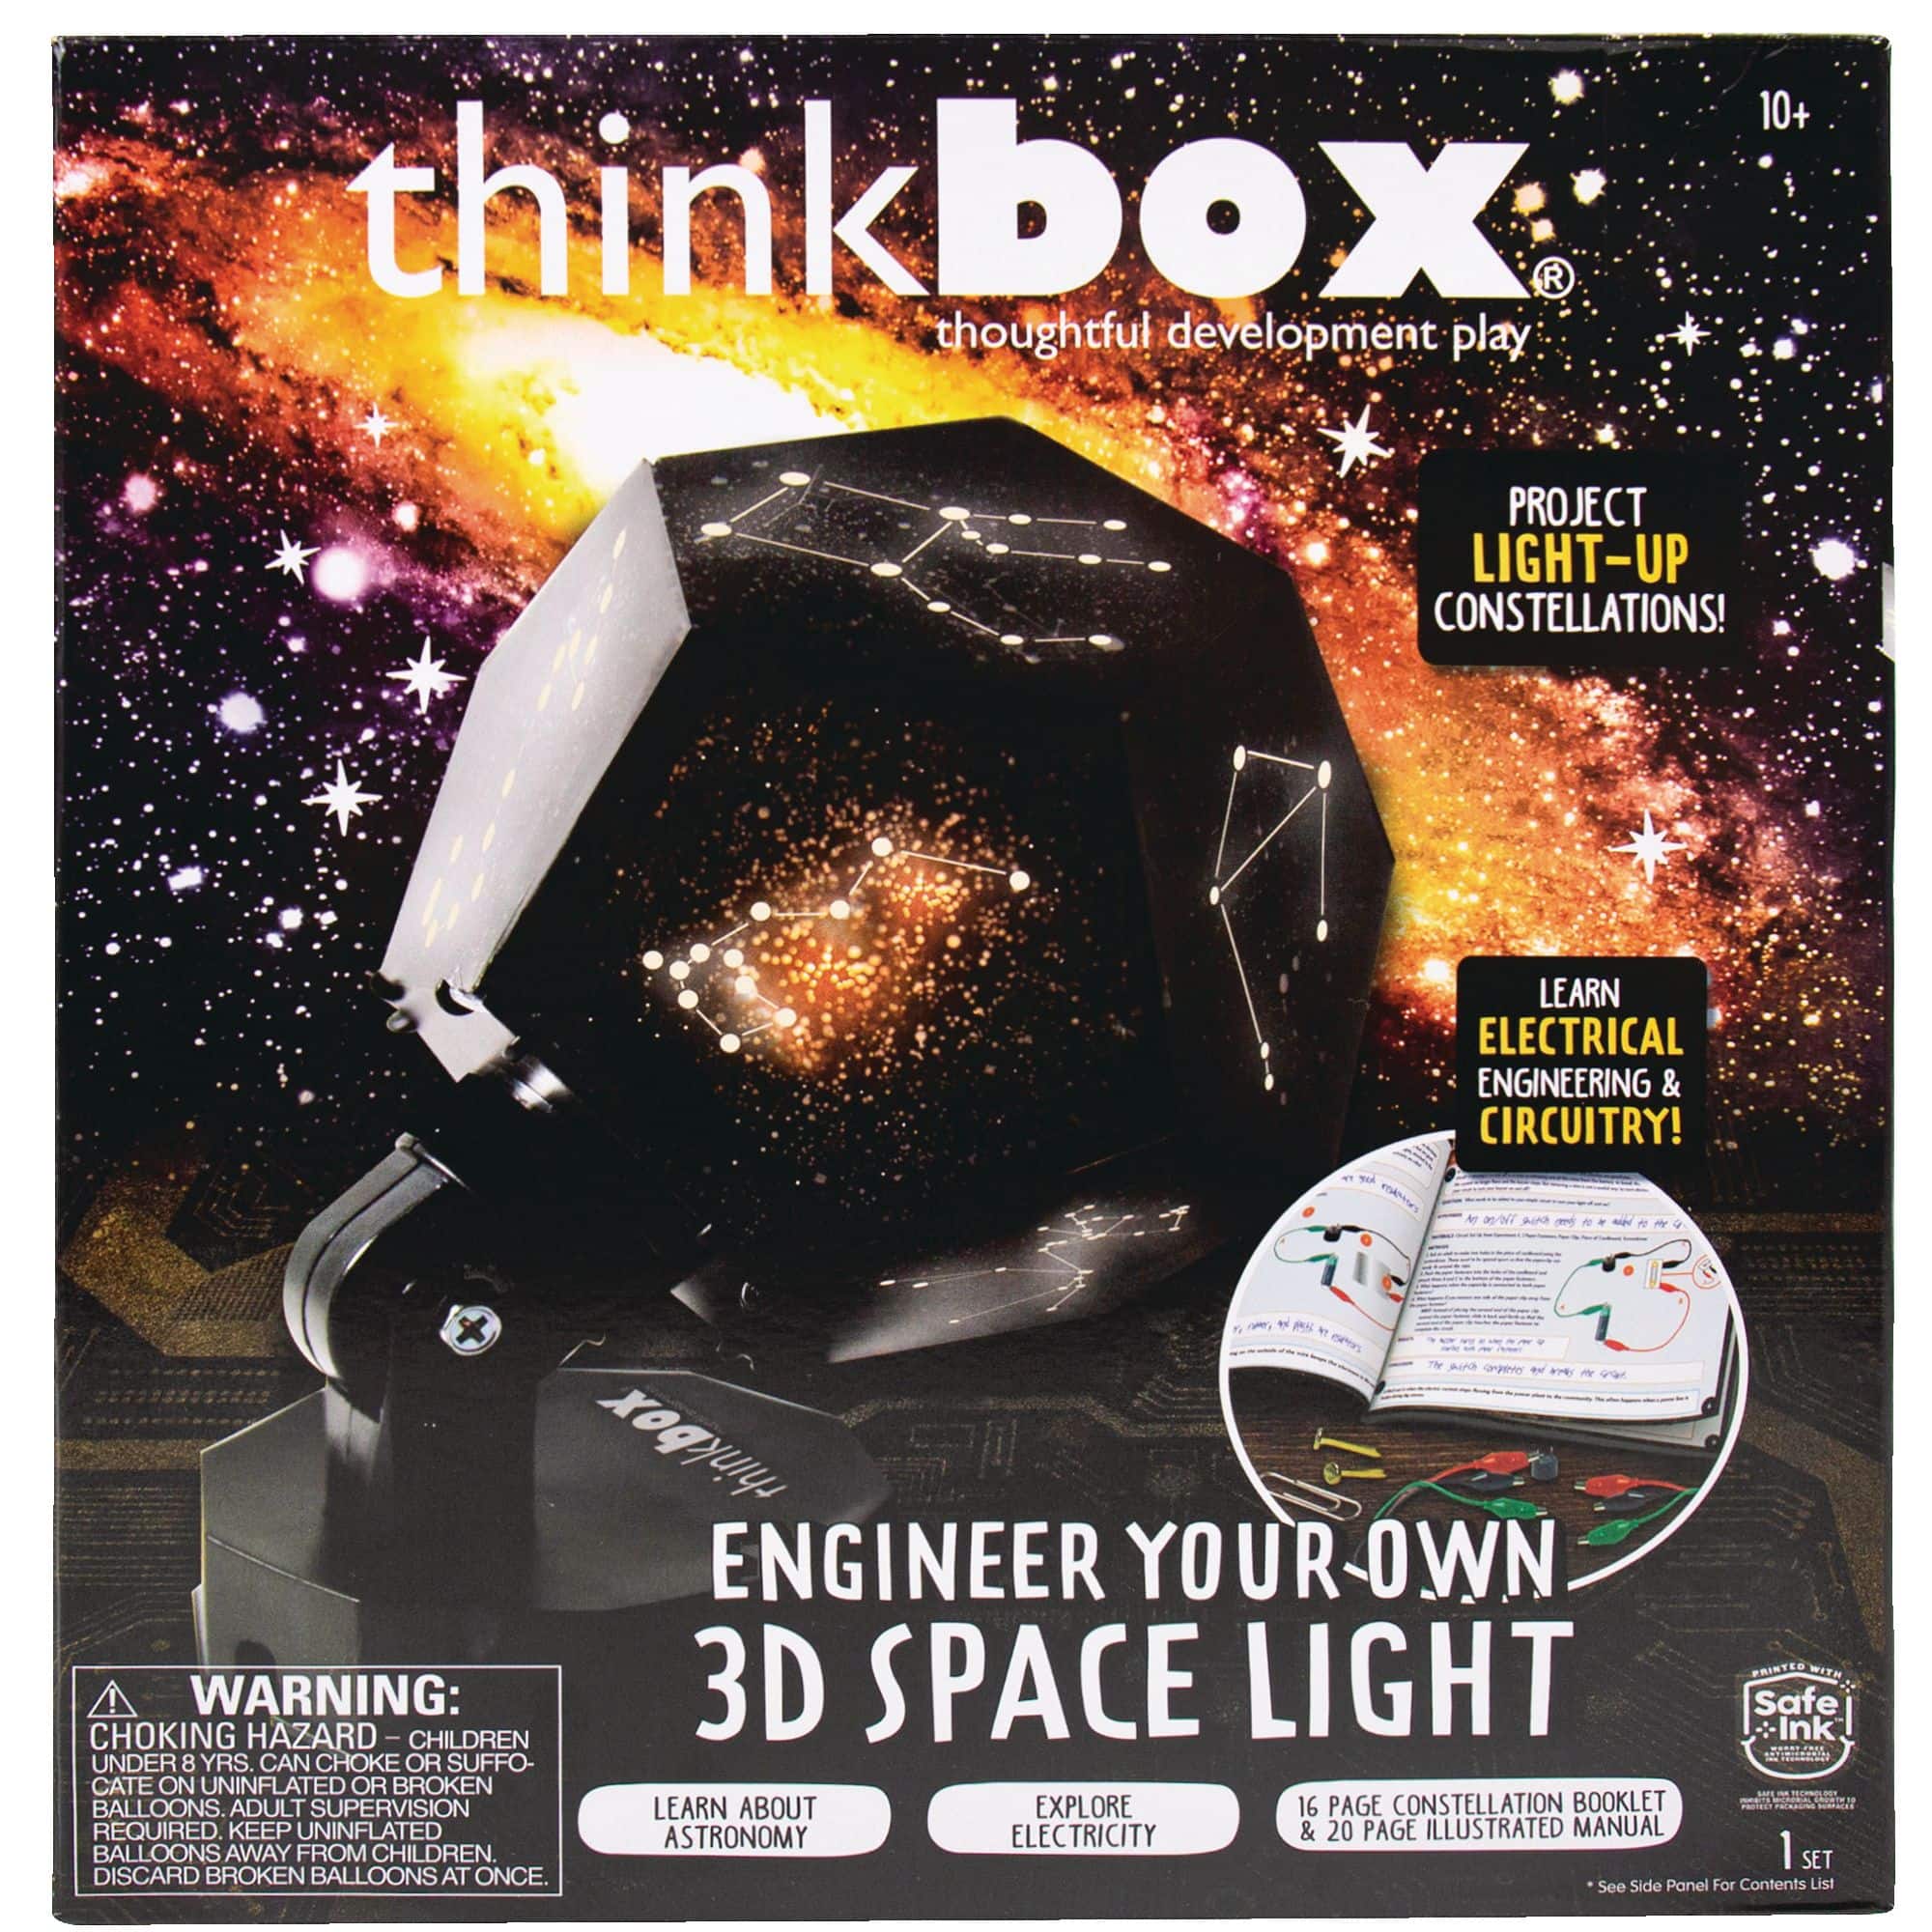 thinkbox 3d spacelight 301c8da3 c5ec 404b 952e 01d1fb193463 jpgrendition